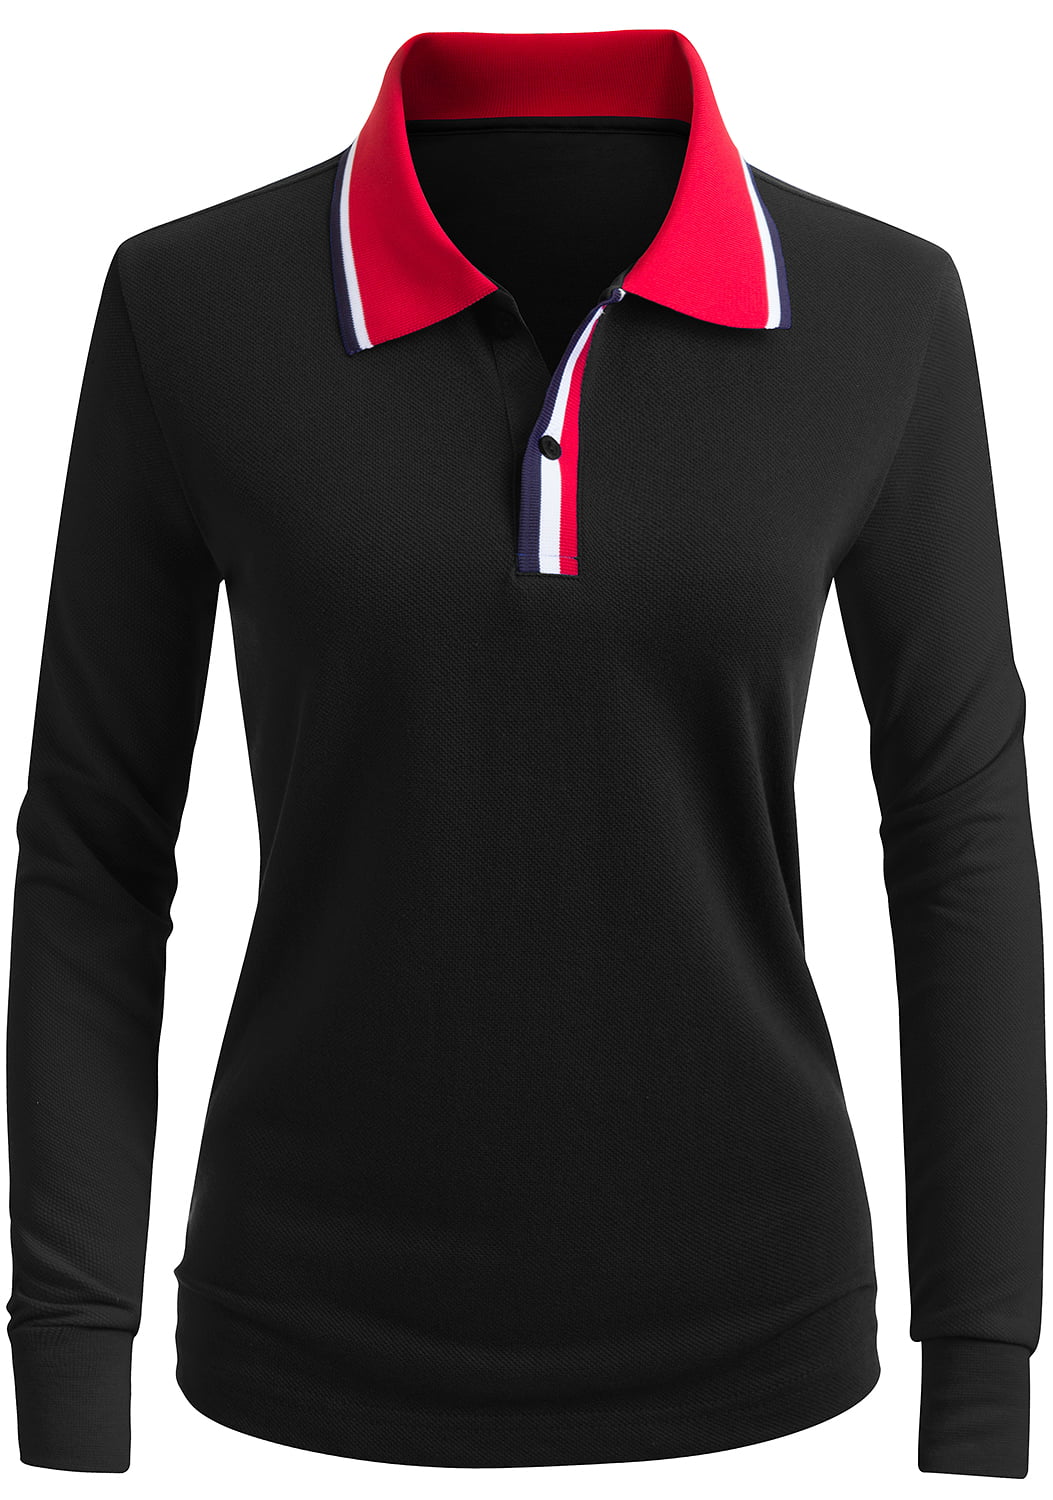 CLOVERY Women's Polo Shirt Casual 2-Button Short Sleeve Point Collar 